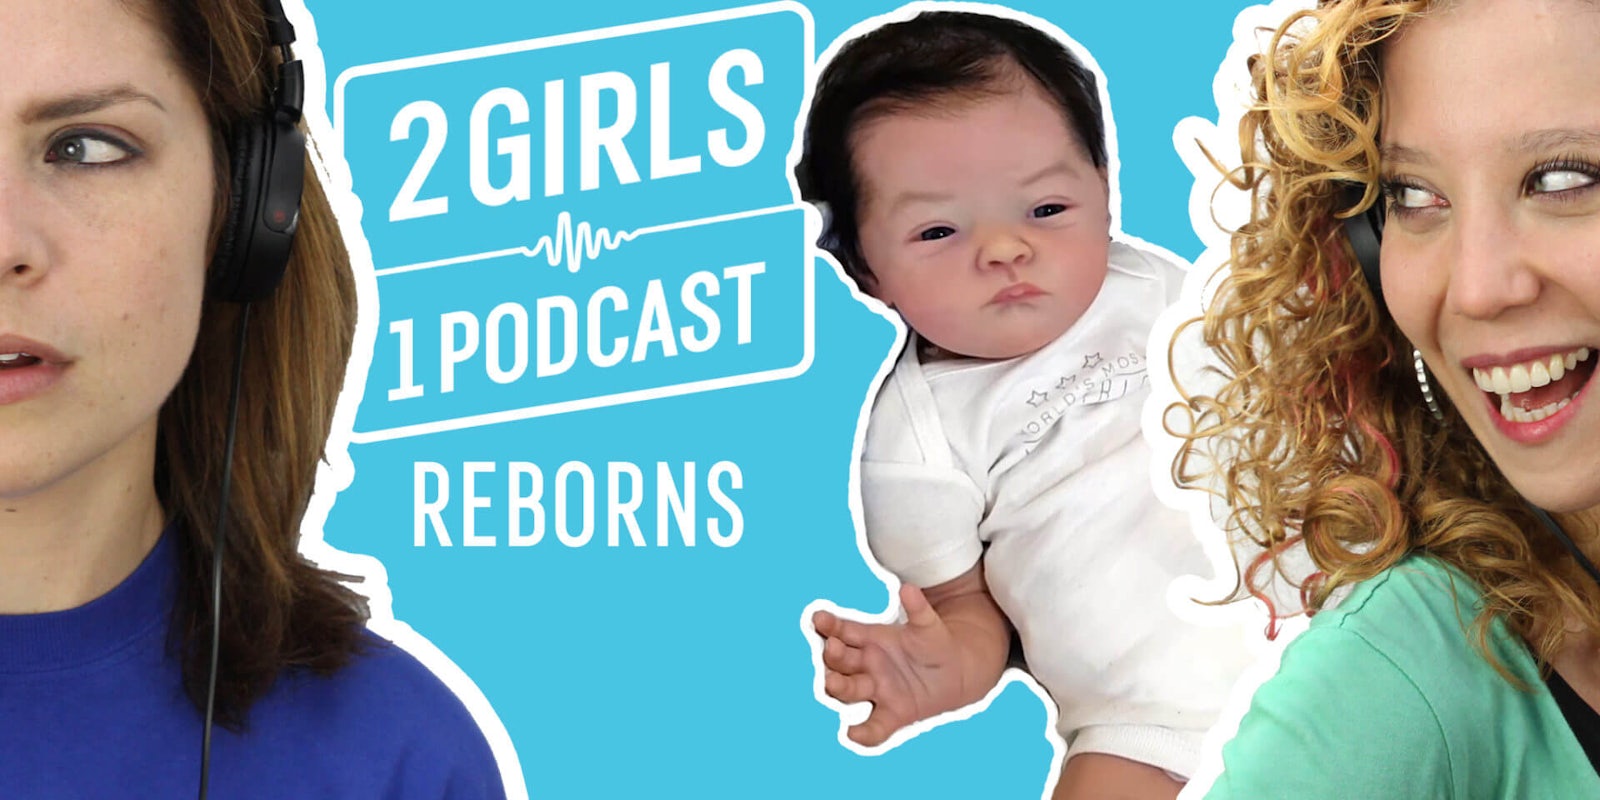 2 Girls 1 Podcast REBORNS